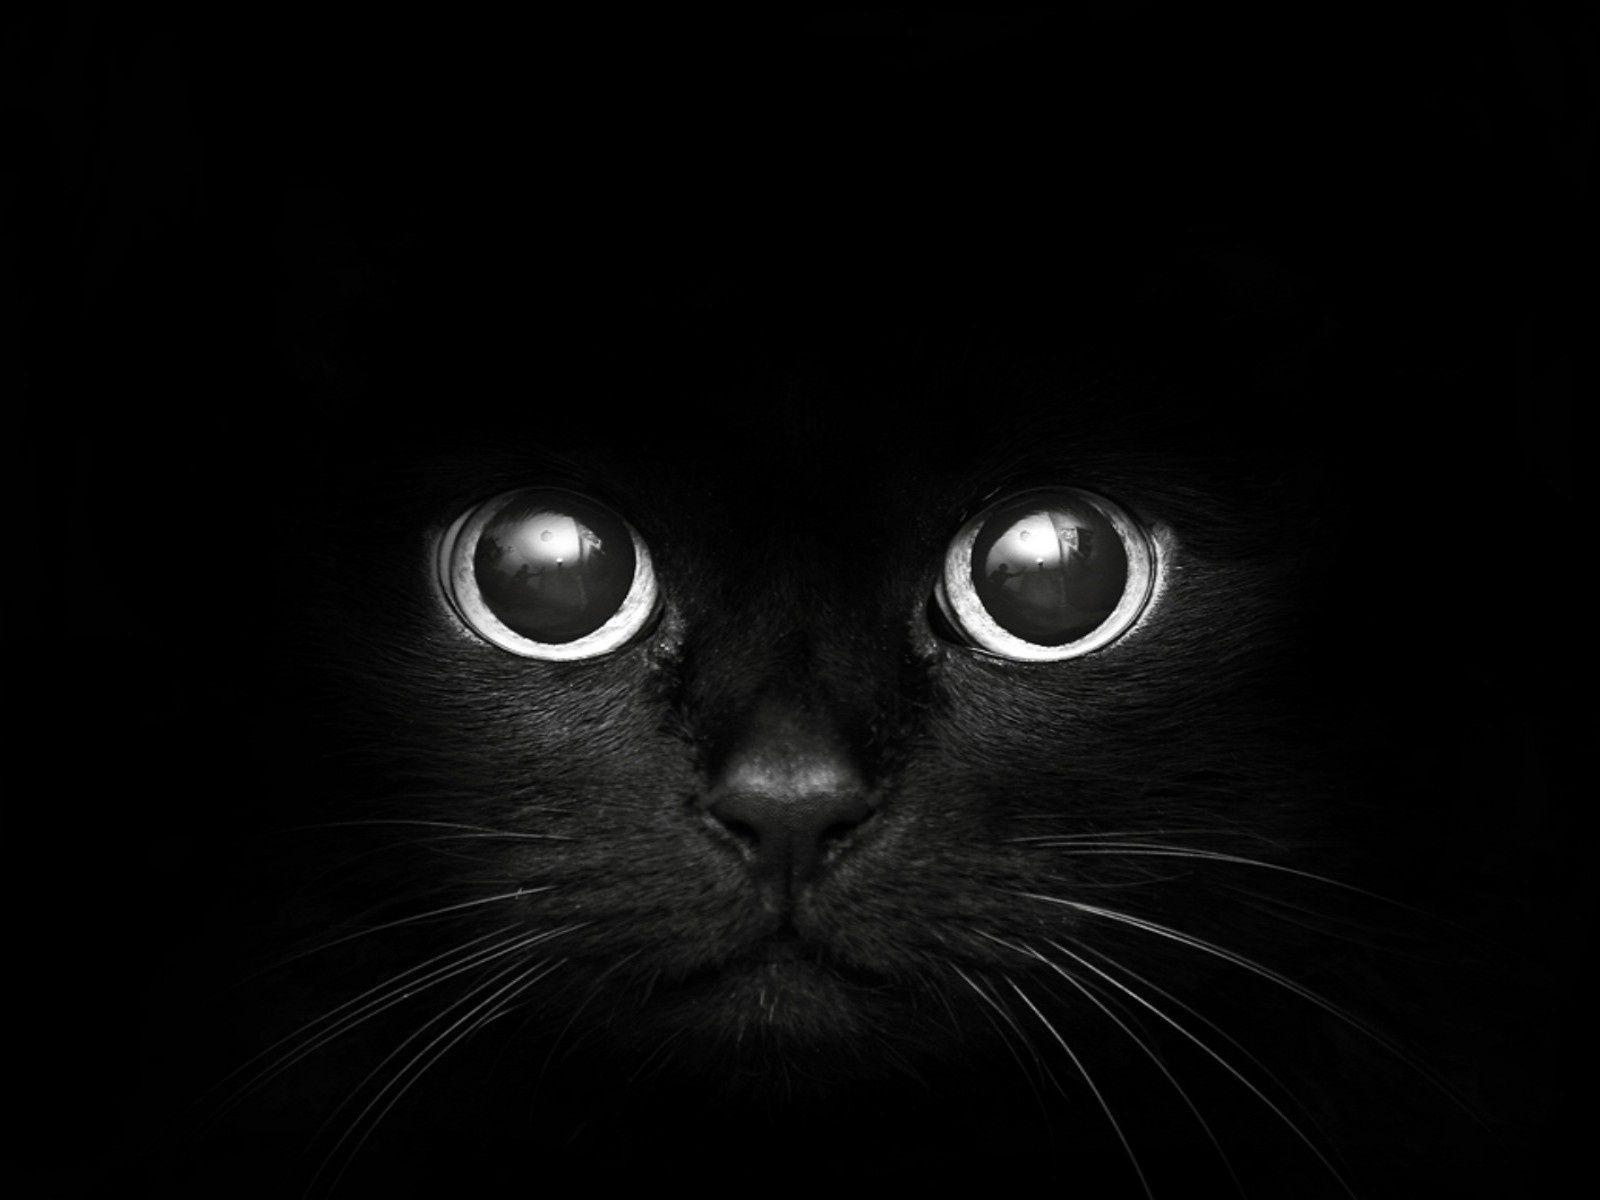 Black Cat with Big Eyes wallpaper 1080p (1600 x 1200 ) Art